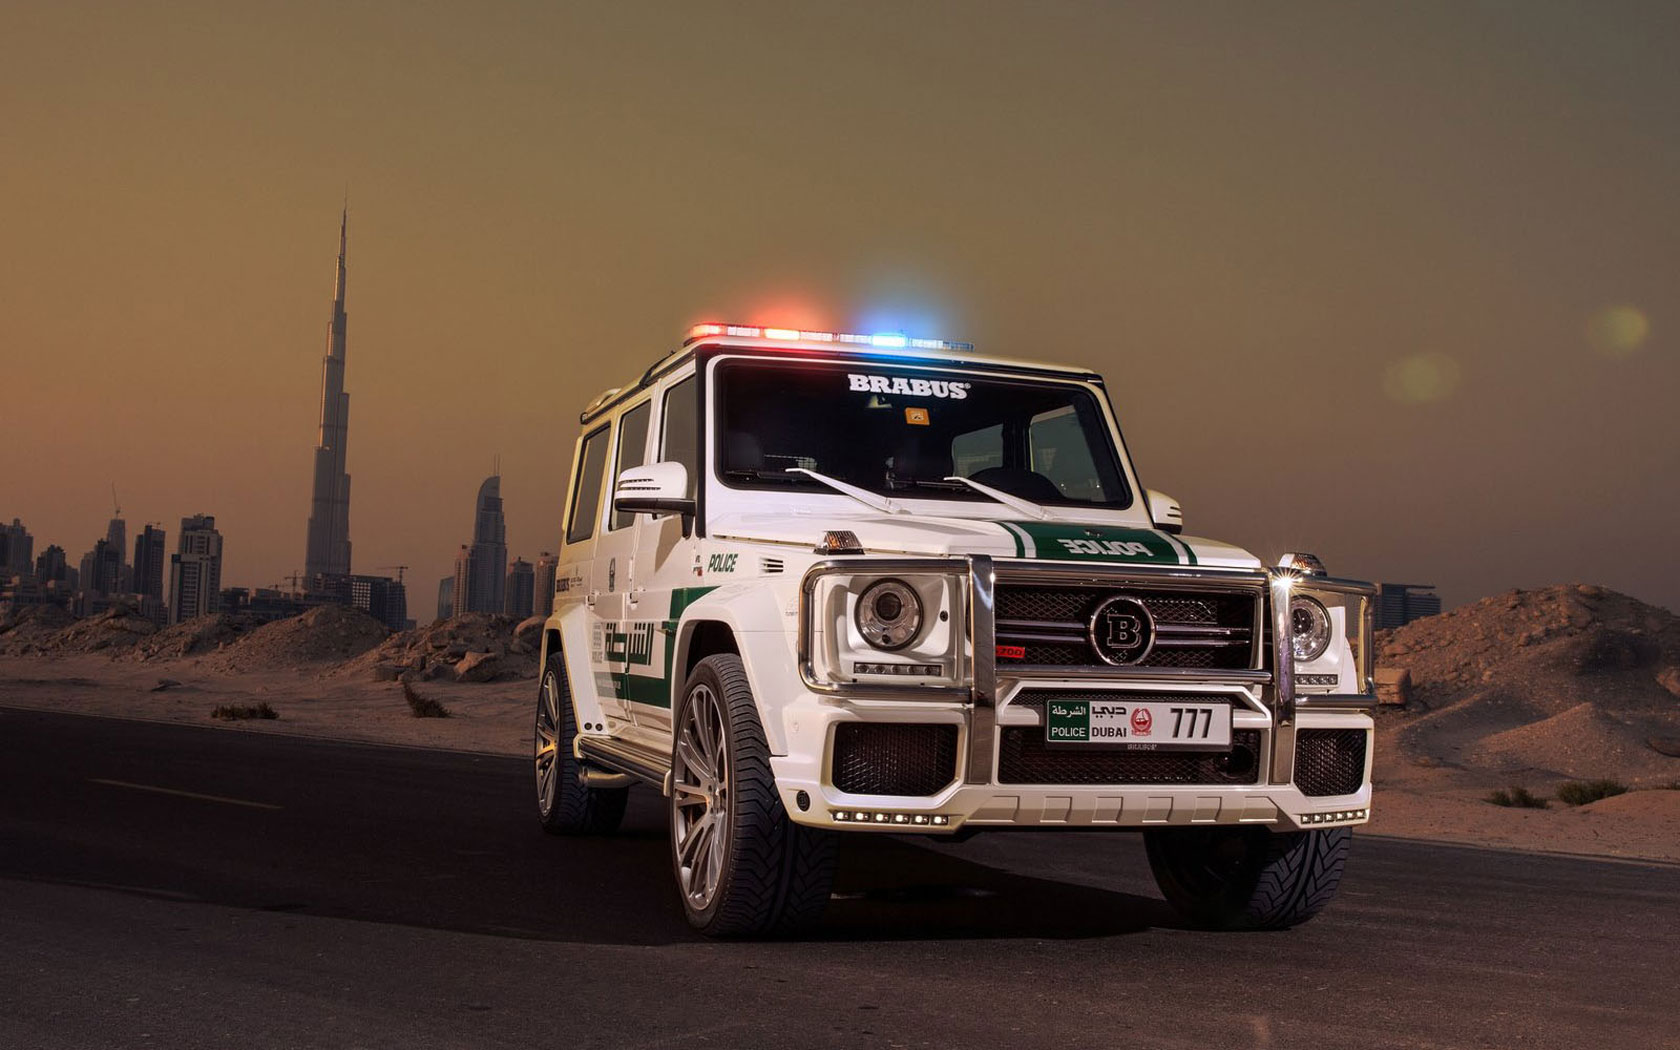 Brabus B63S-700 Widestar Dubai Police